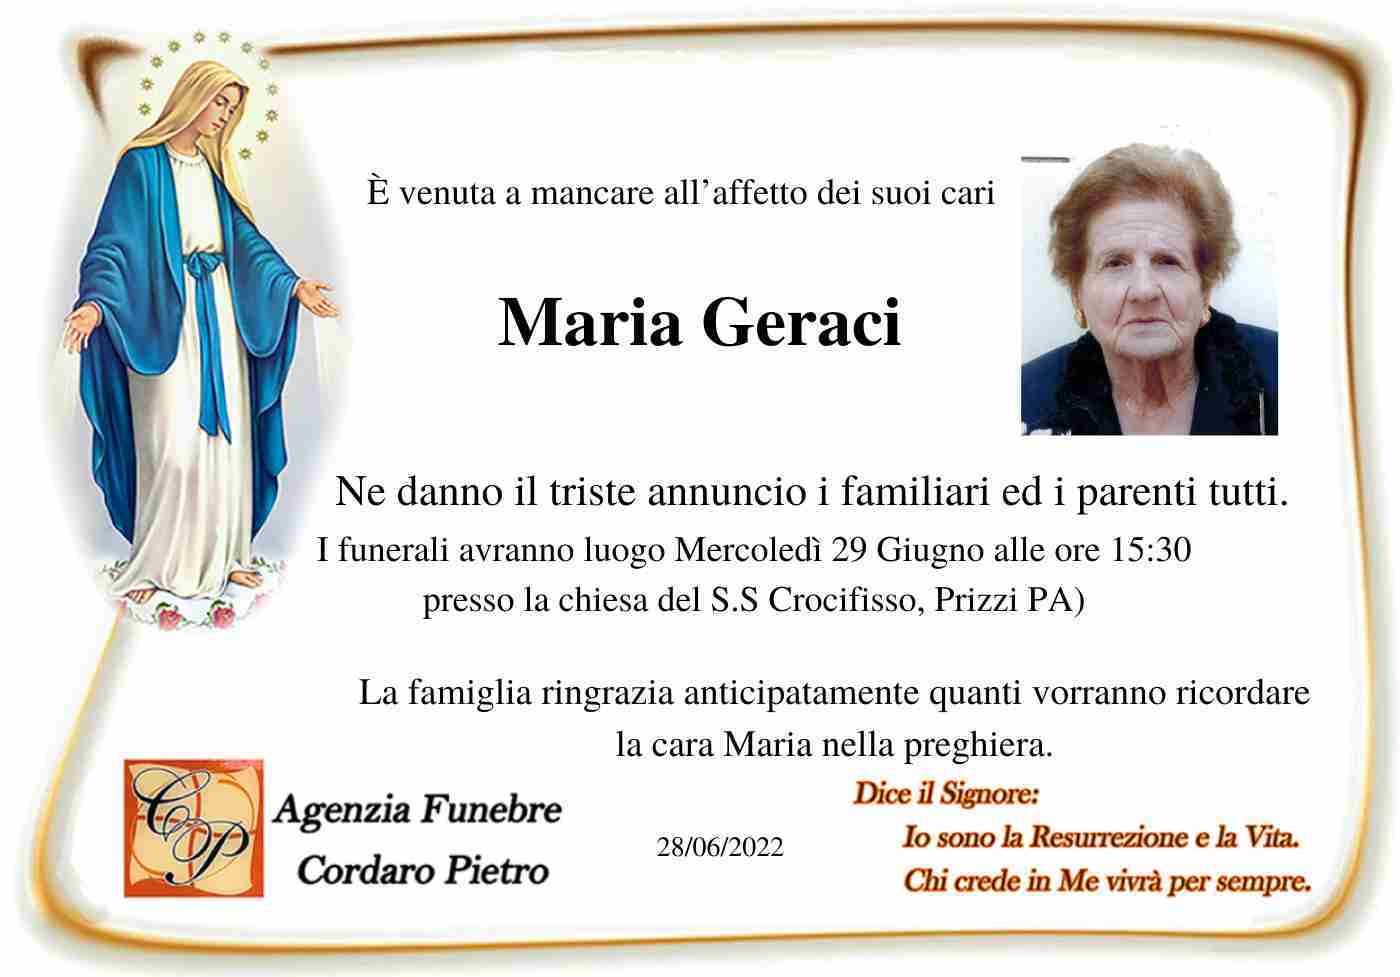 Maria Geraci